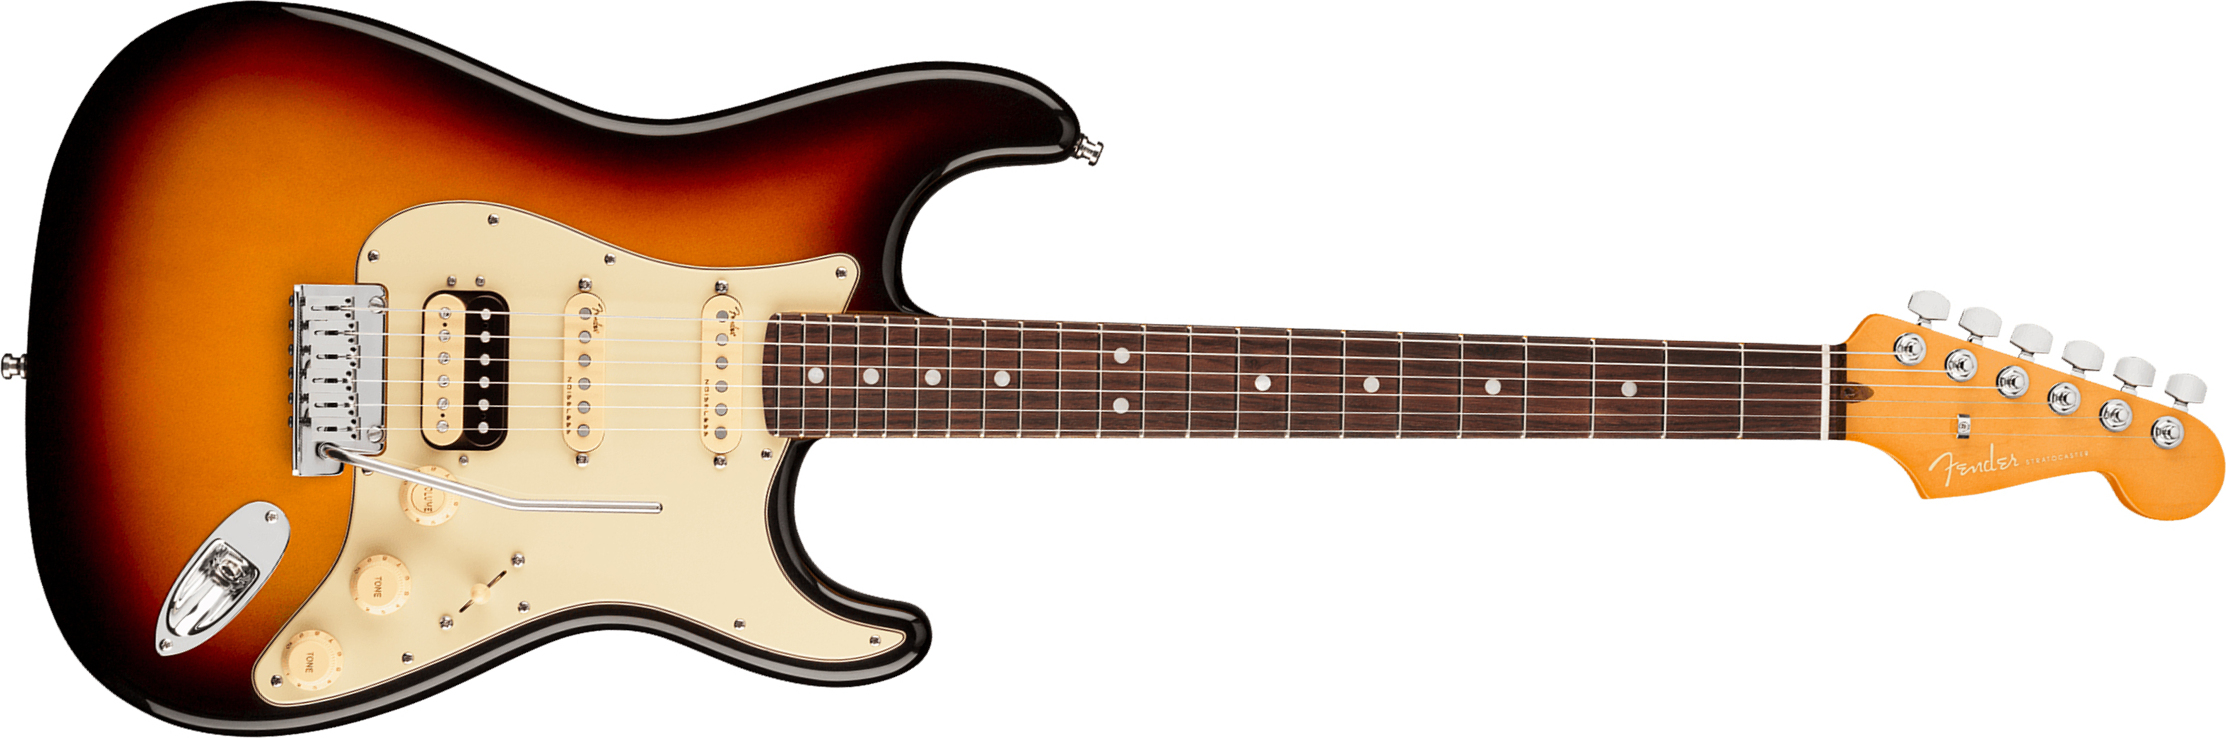 Fender Strat American Ultra Hss 2019 Usa Rw - Ultraburst - Str shape electric guitar - Main picture